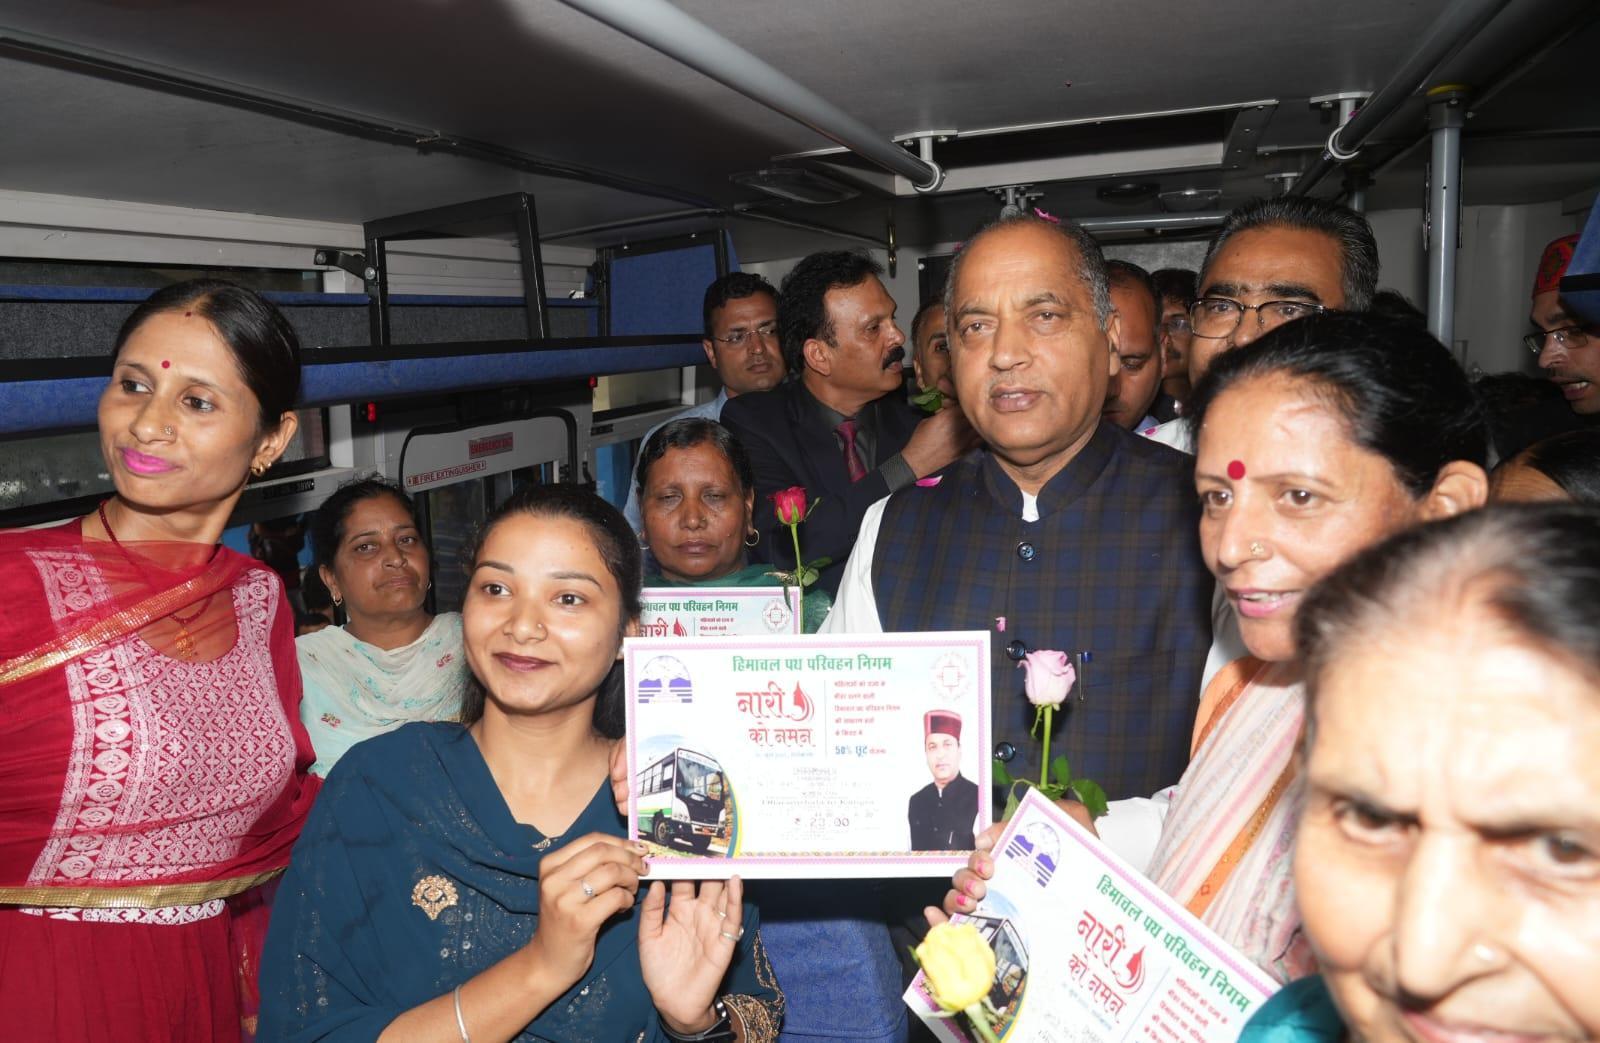 Himachal Pradesh CM launched ‘Nari Ko Naman’ scheme for women